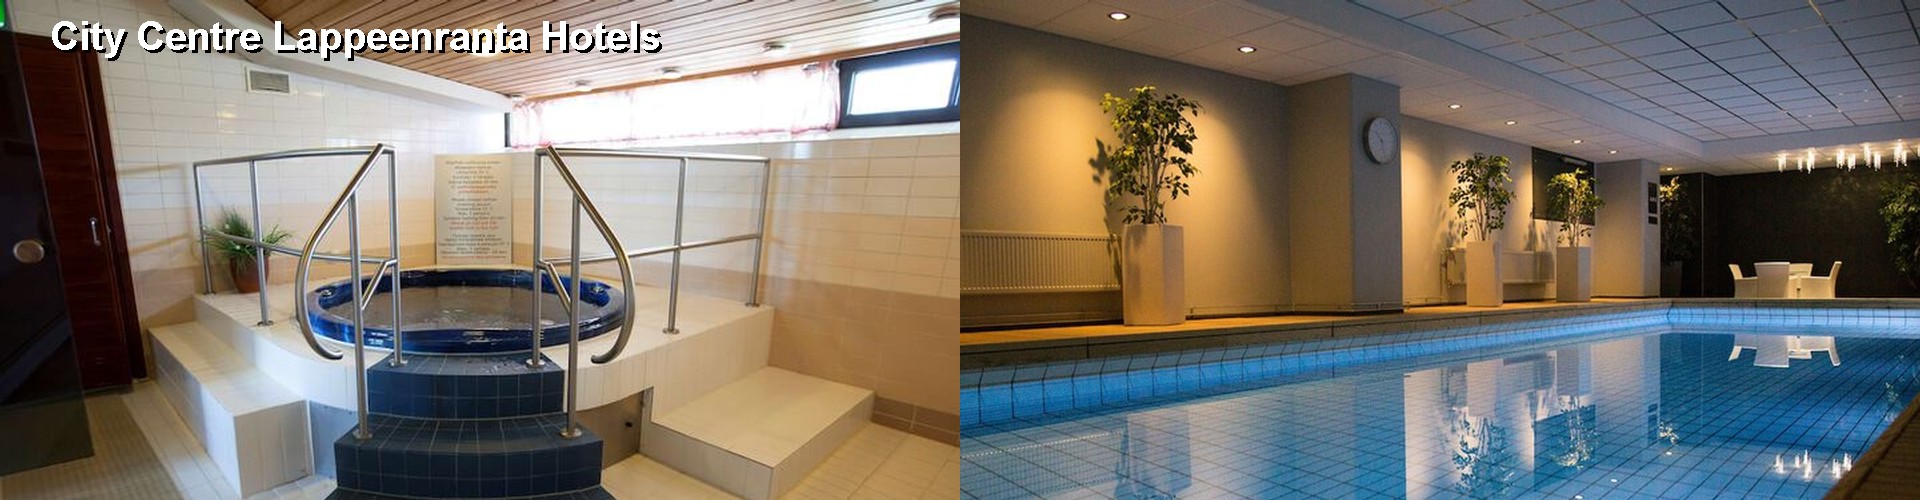 4 Best Hotels near City Centre Lappeenranta